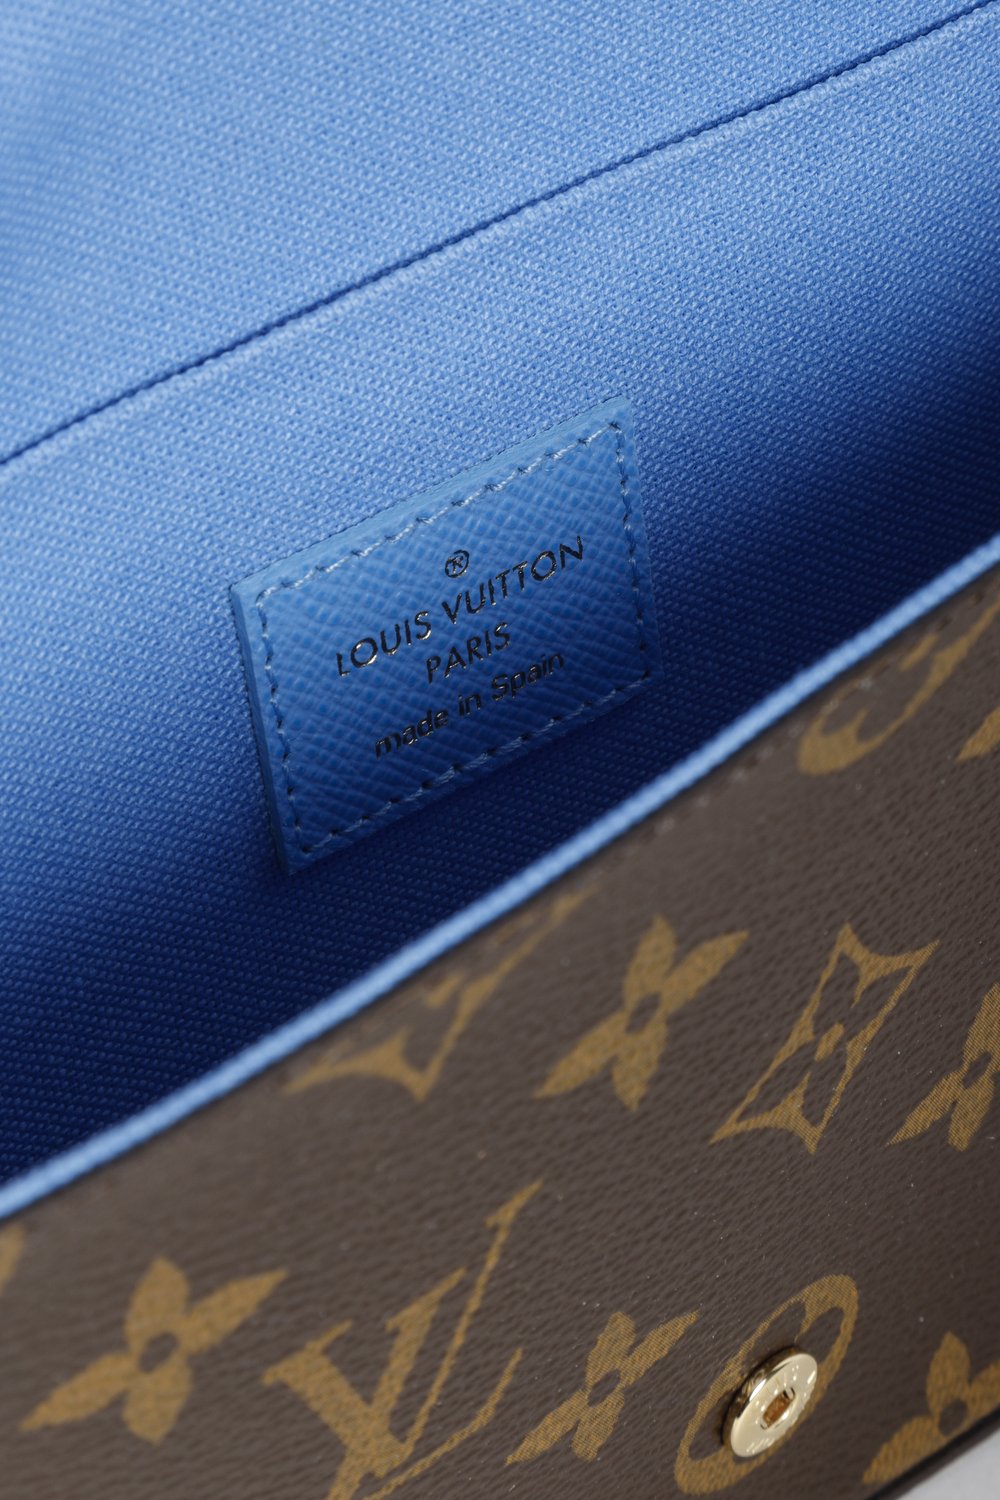 Louis Vuitton Eva Pochette Archive - Oh Wunderbar - Blog - Family